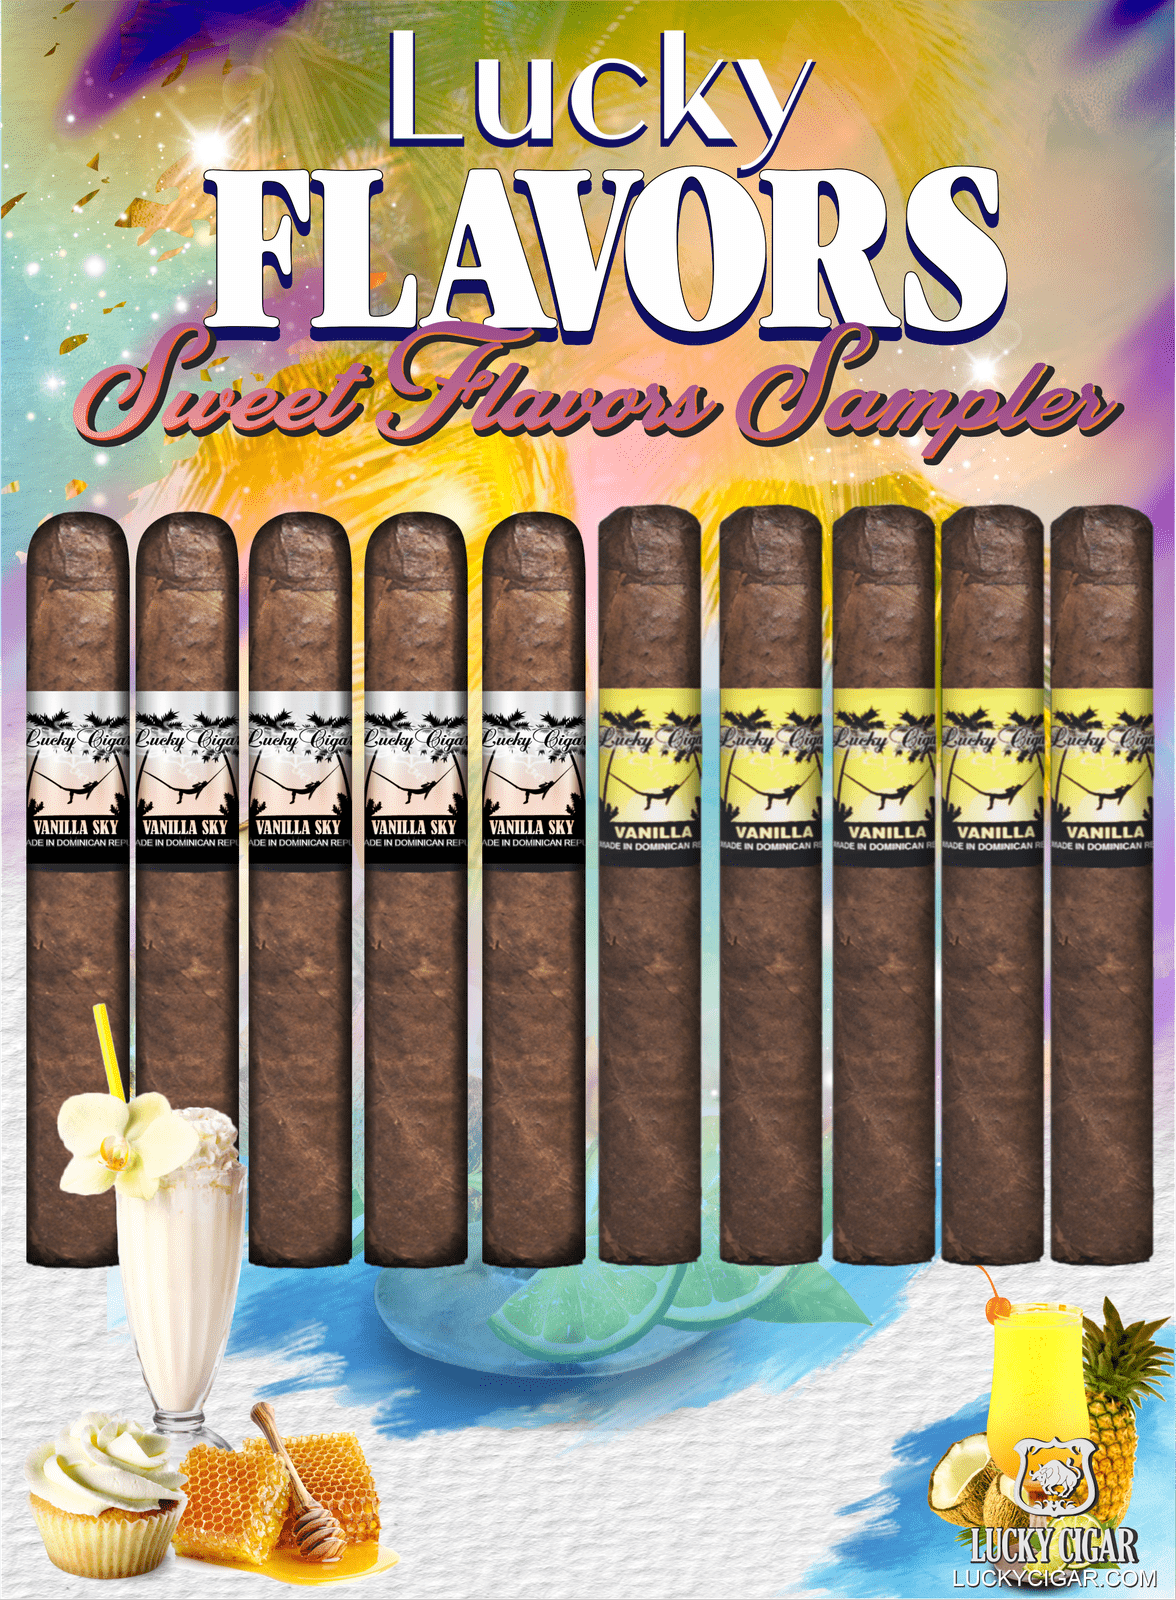 Flavored Cigars: Lucky Flavors 10 Piece Sweets Sampler - Vanilla Sky, Vanilla